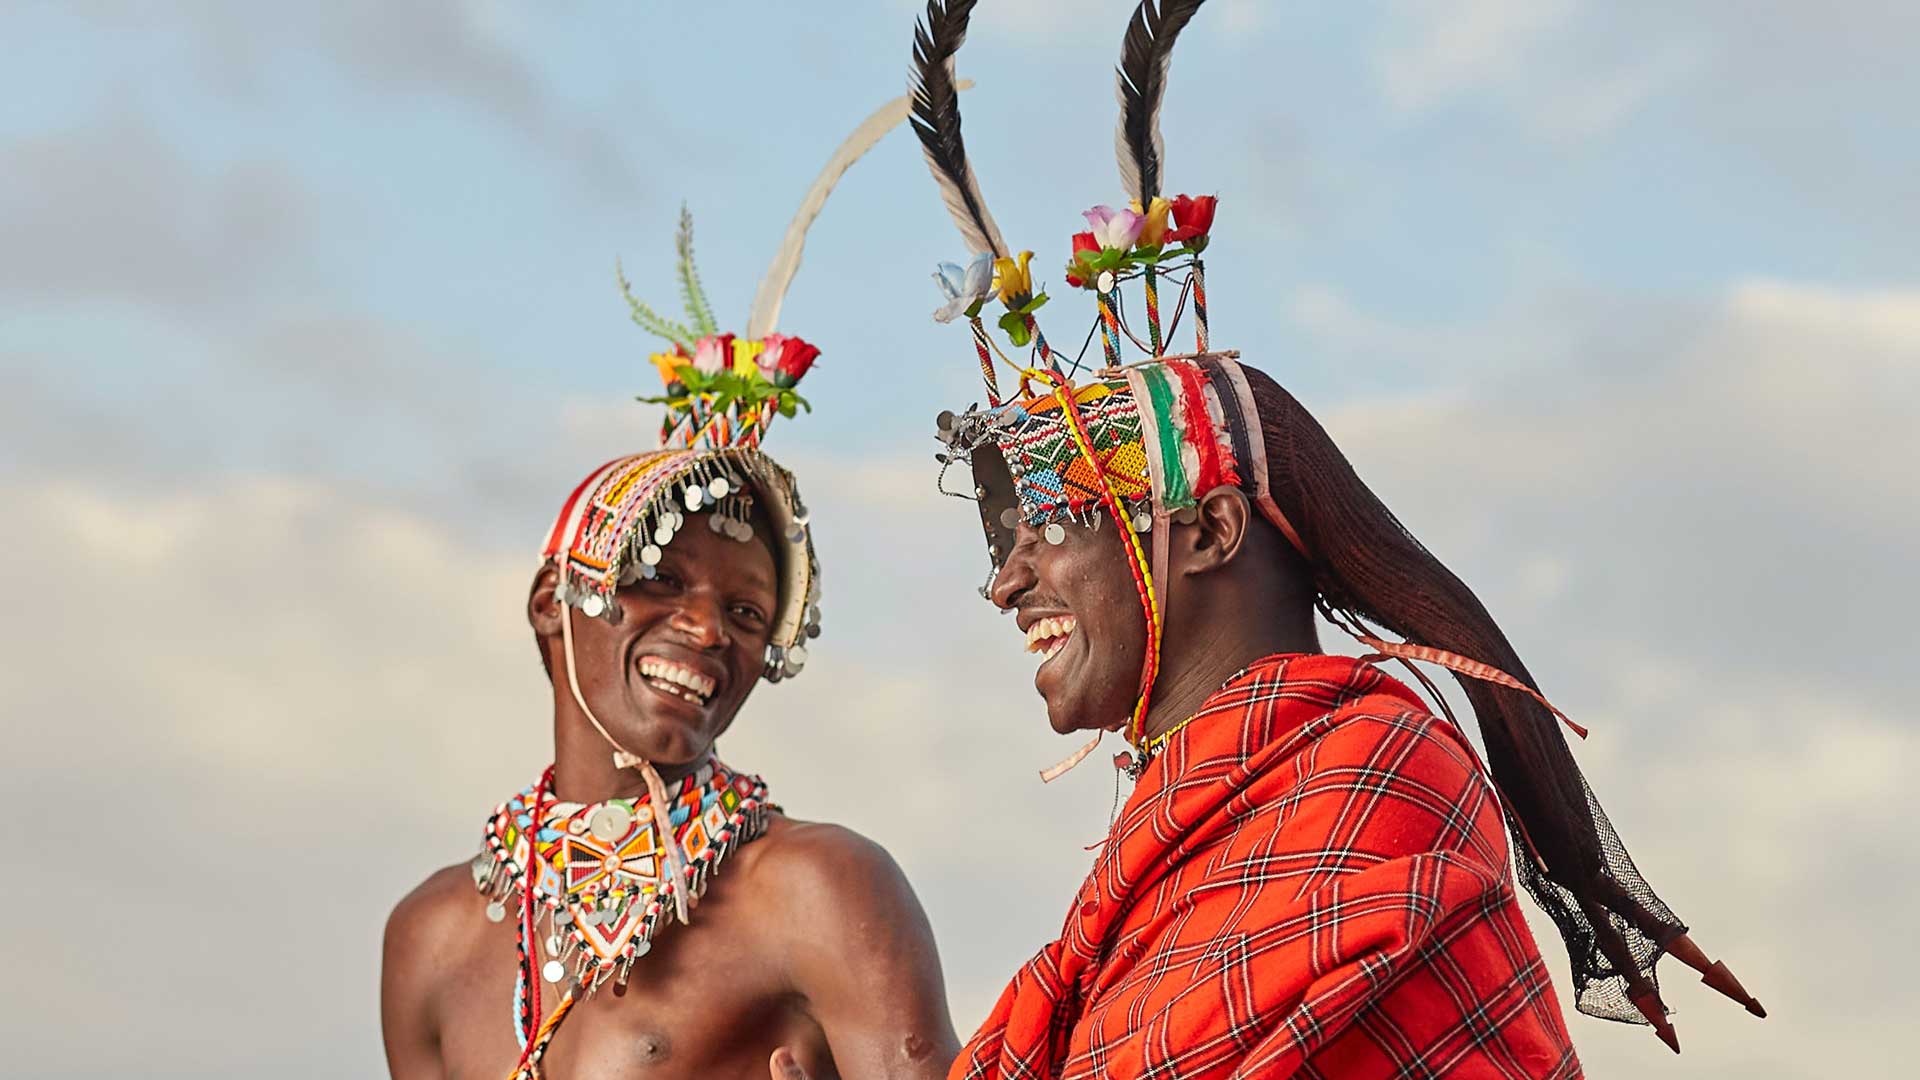 Meet the artmakers at Basecamp Maasai Brand in Kenya - See Great Art